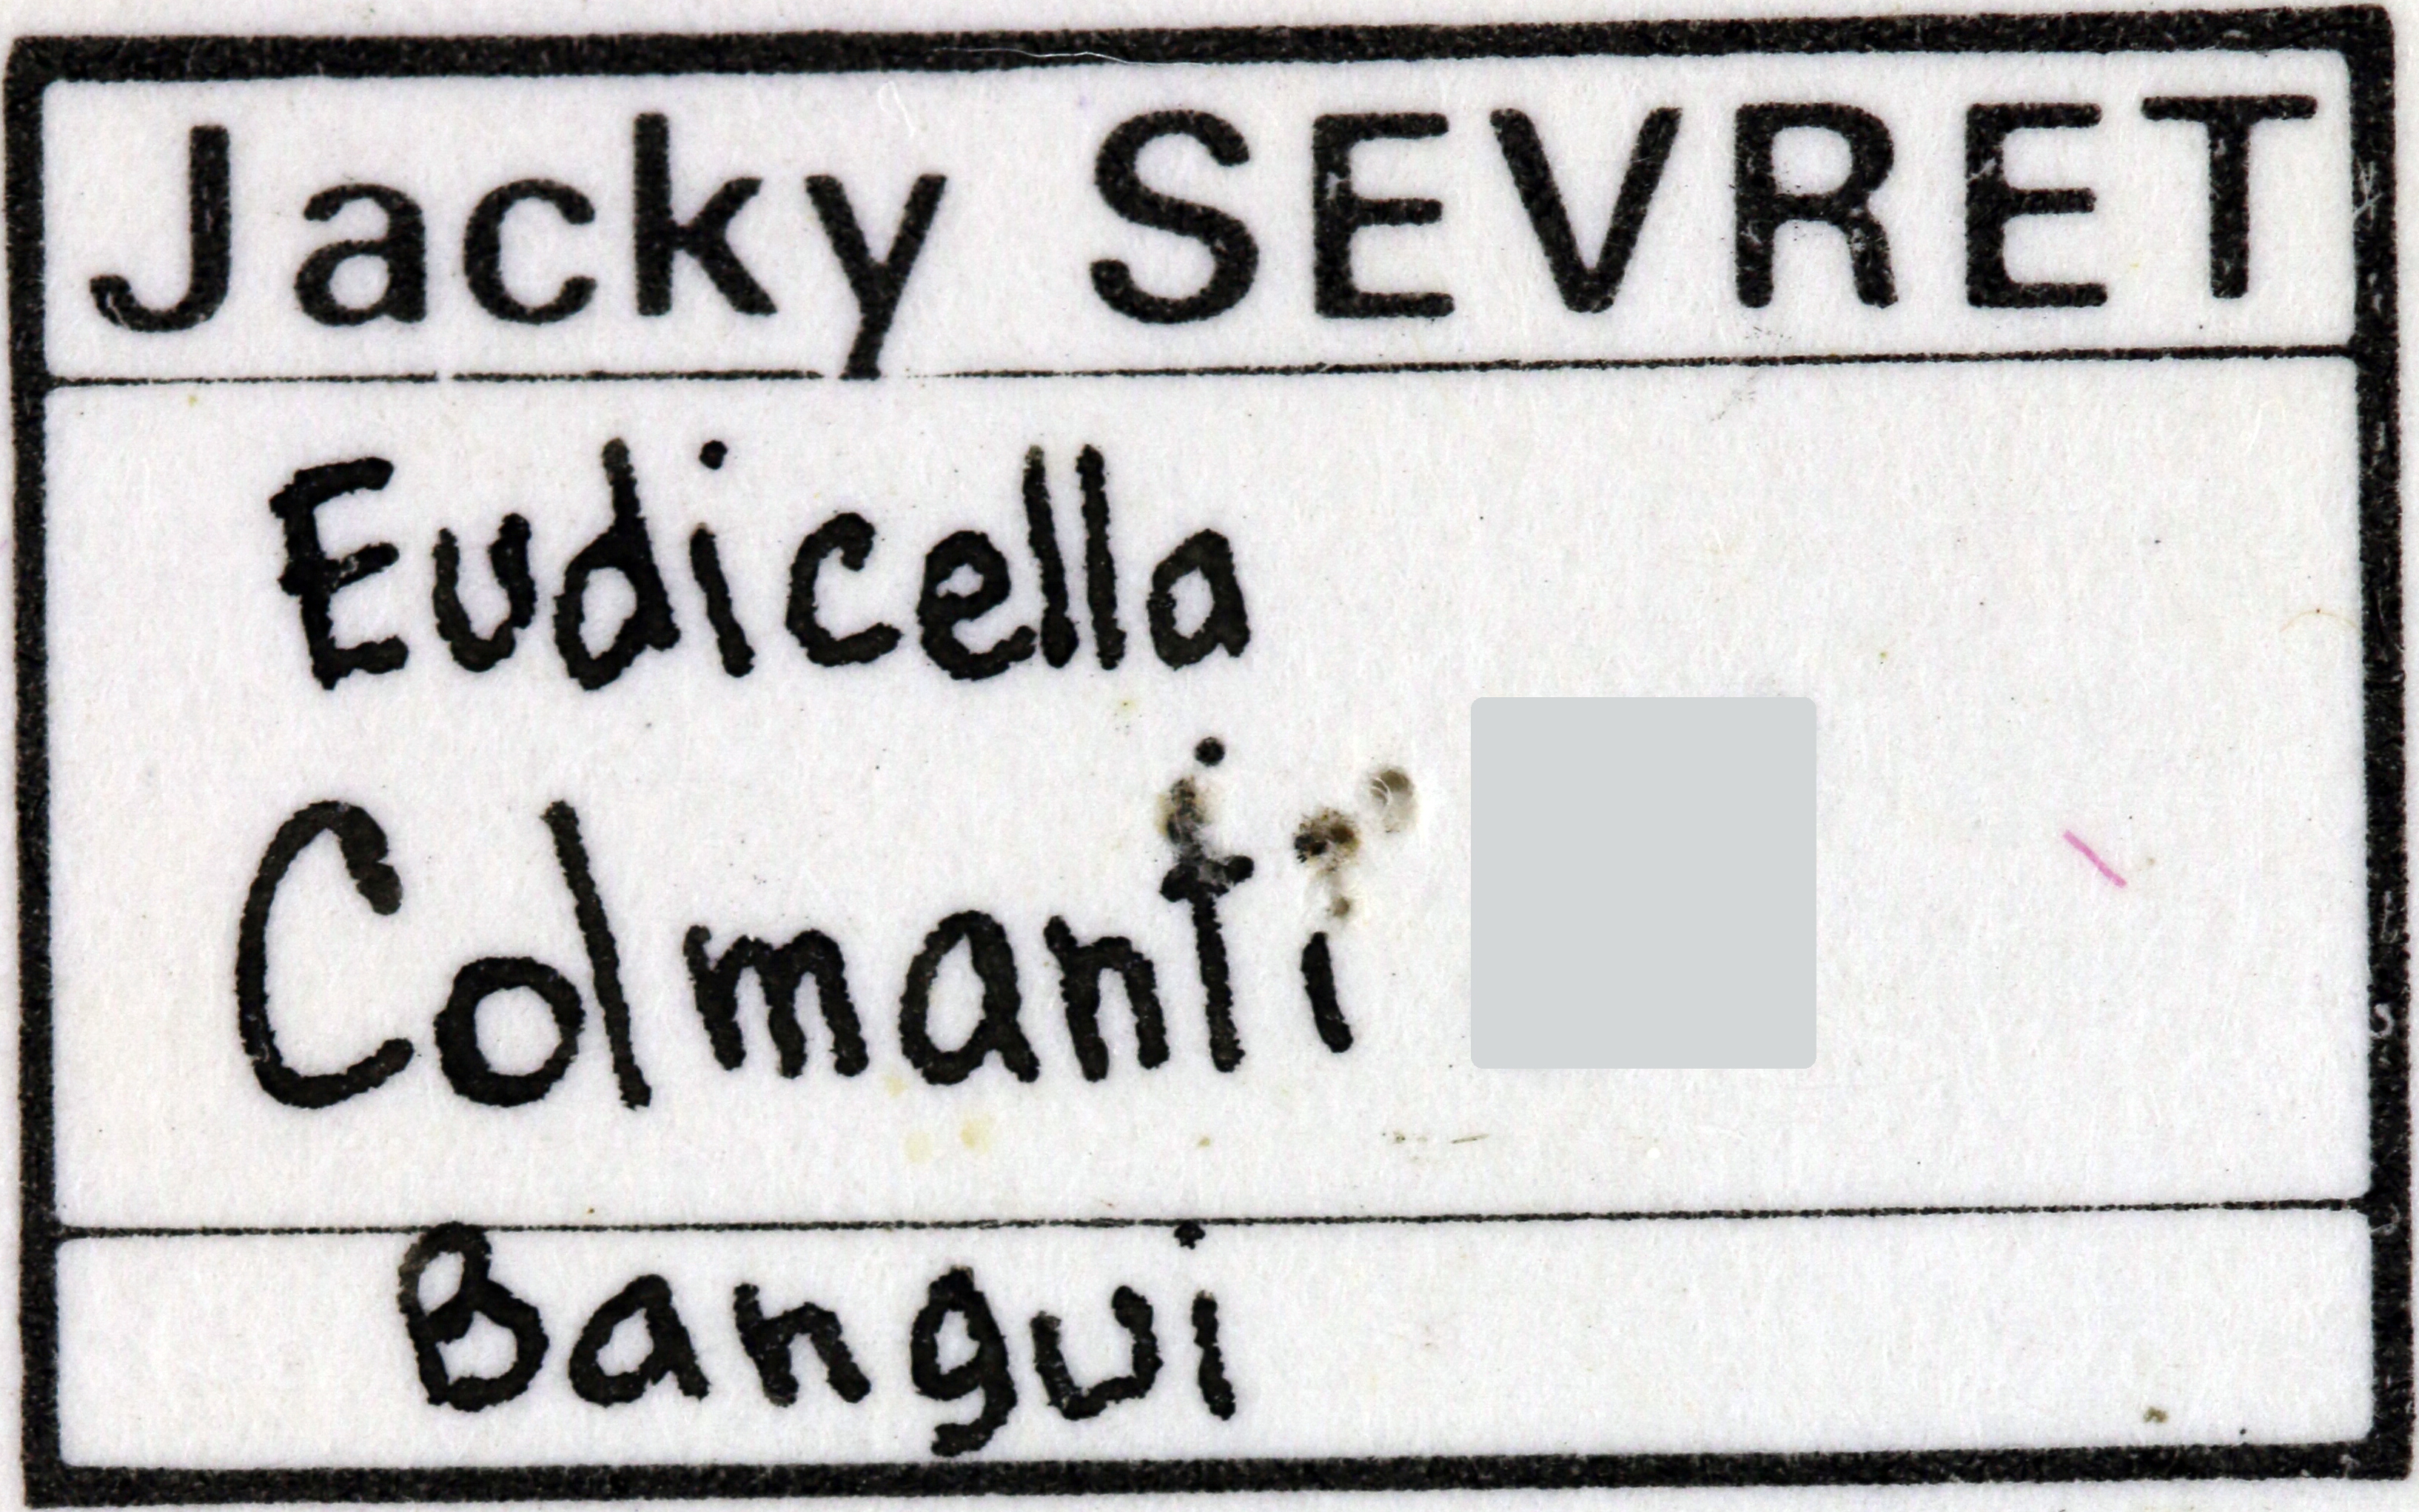 Eudicella colmanti label.jpg